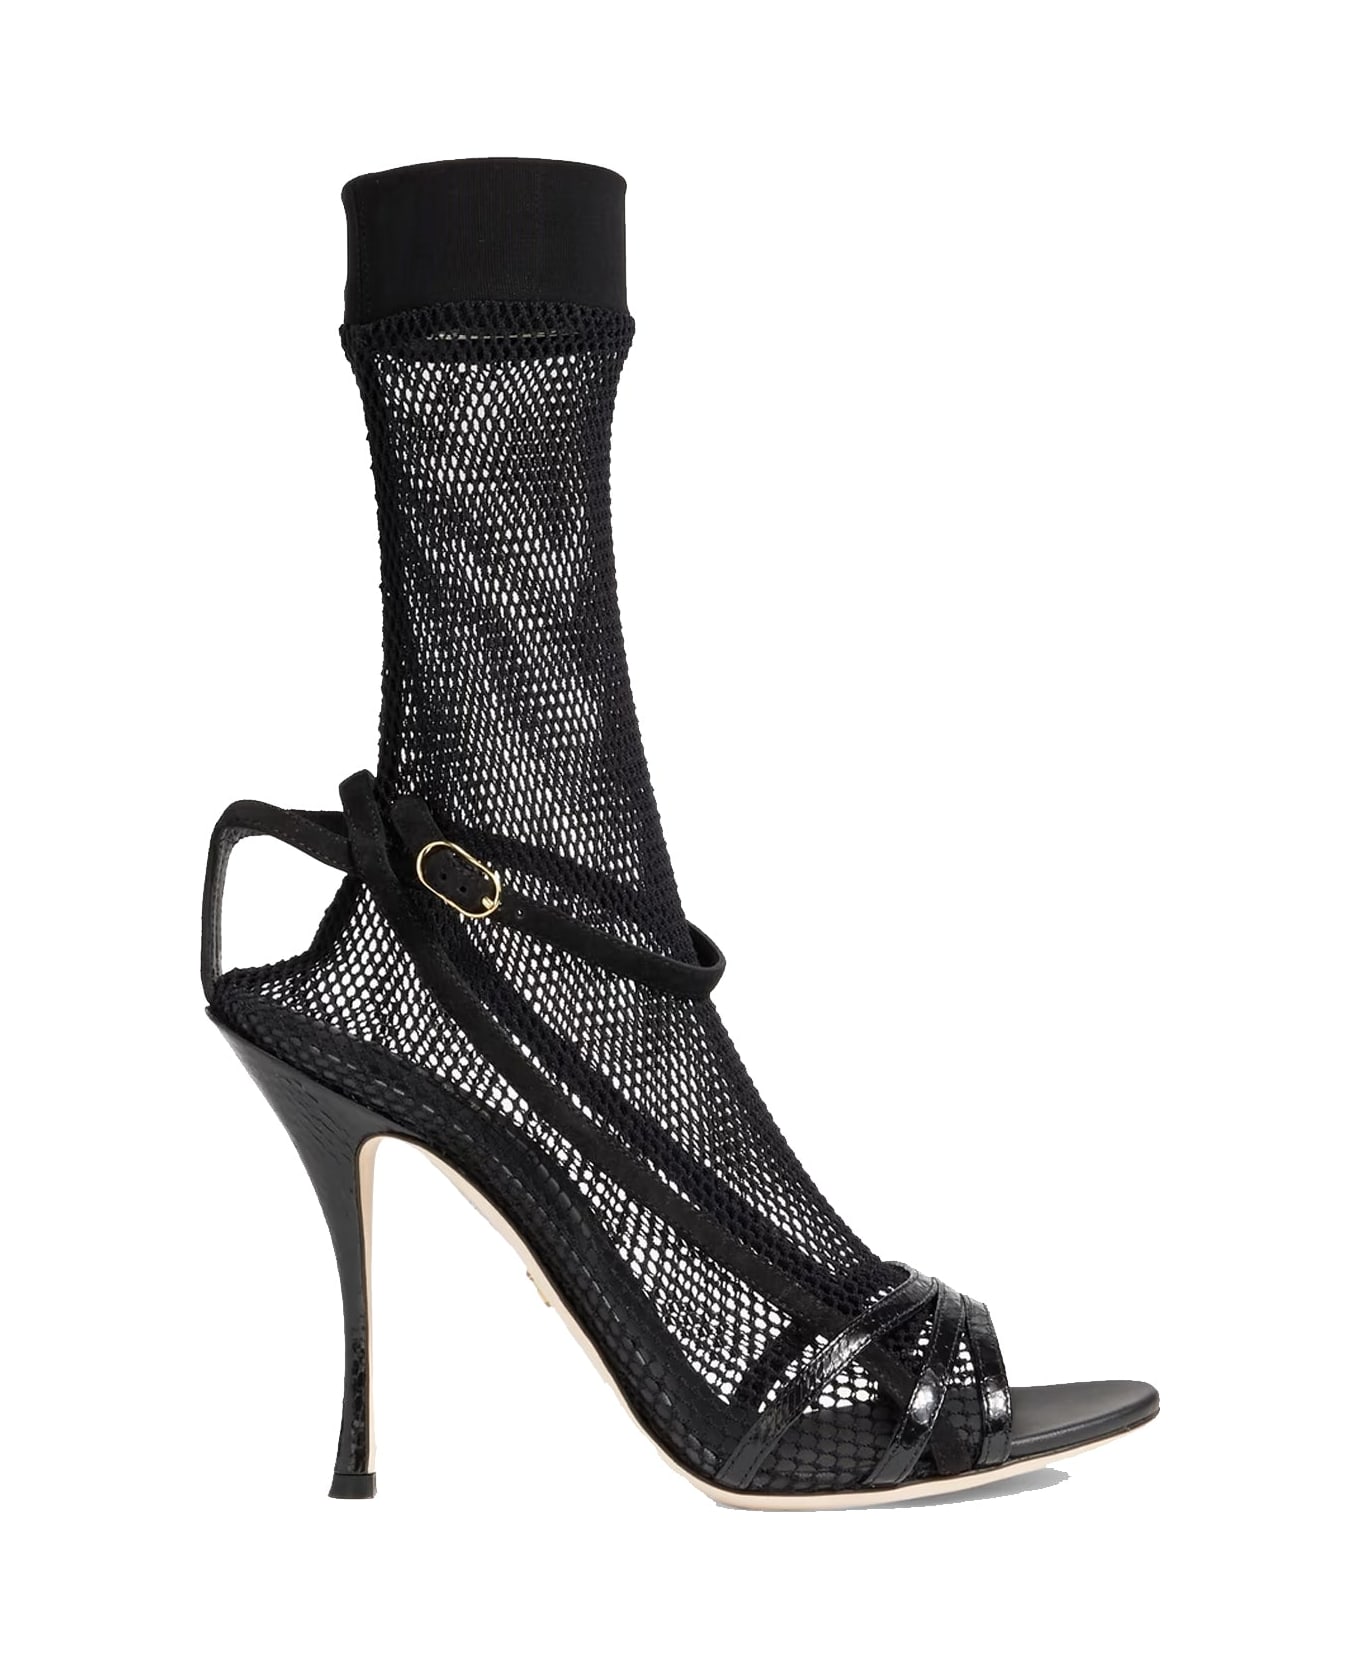 Dolce & Gabbana Fishnet Sandals - Black